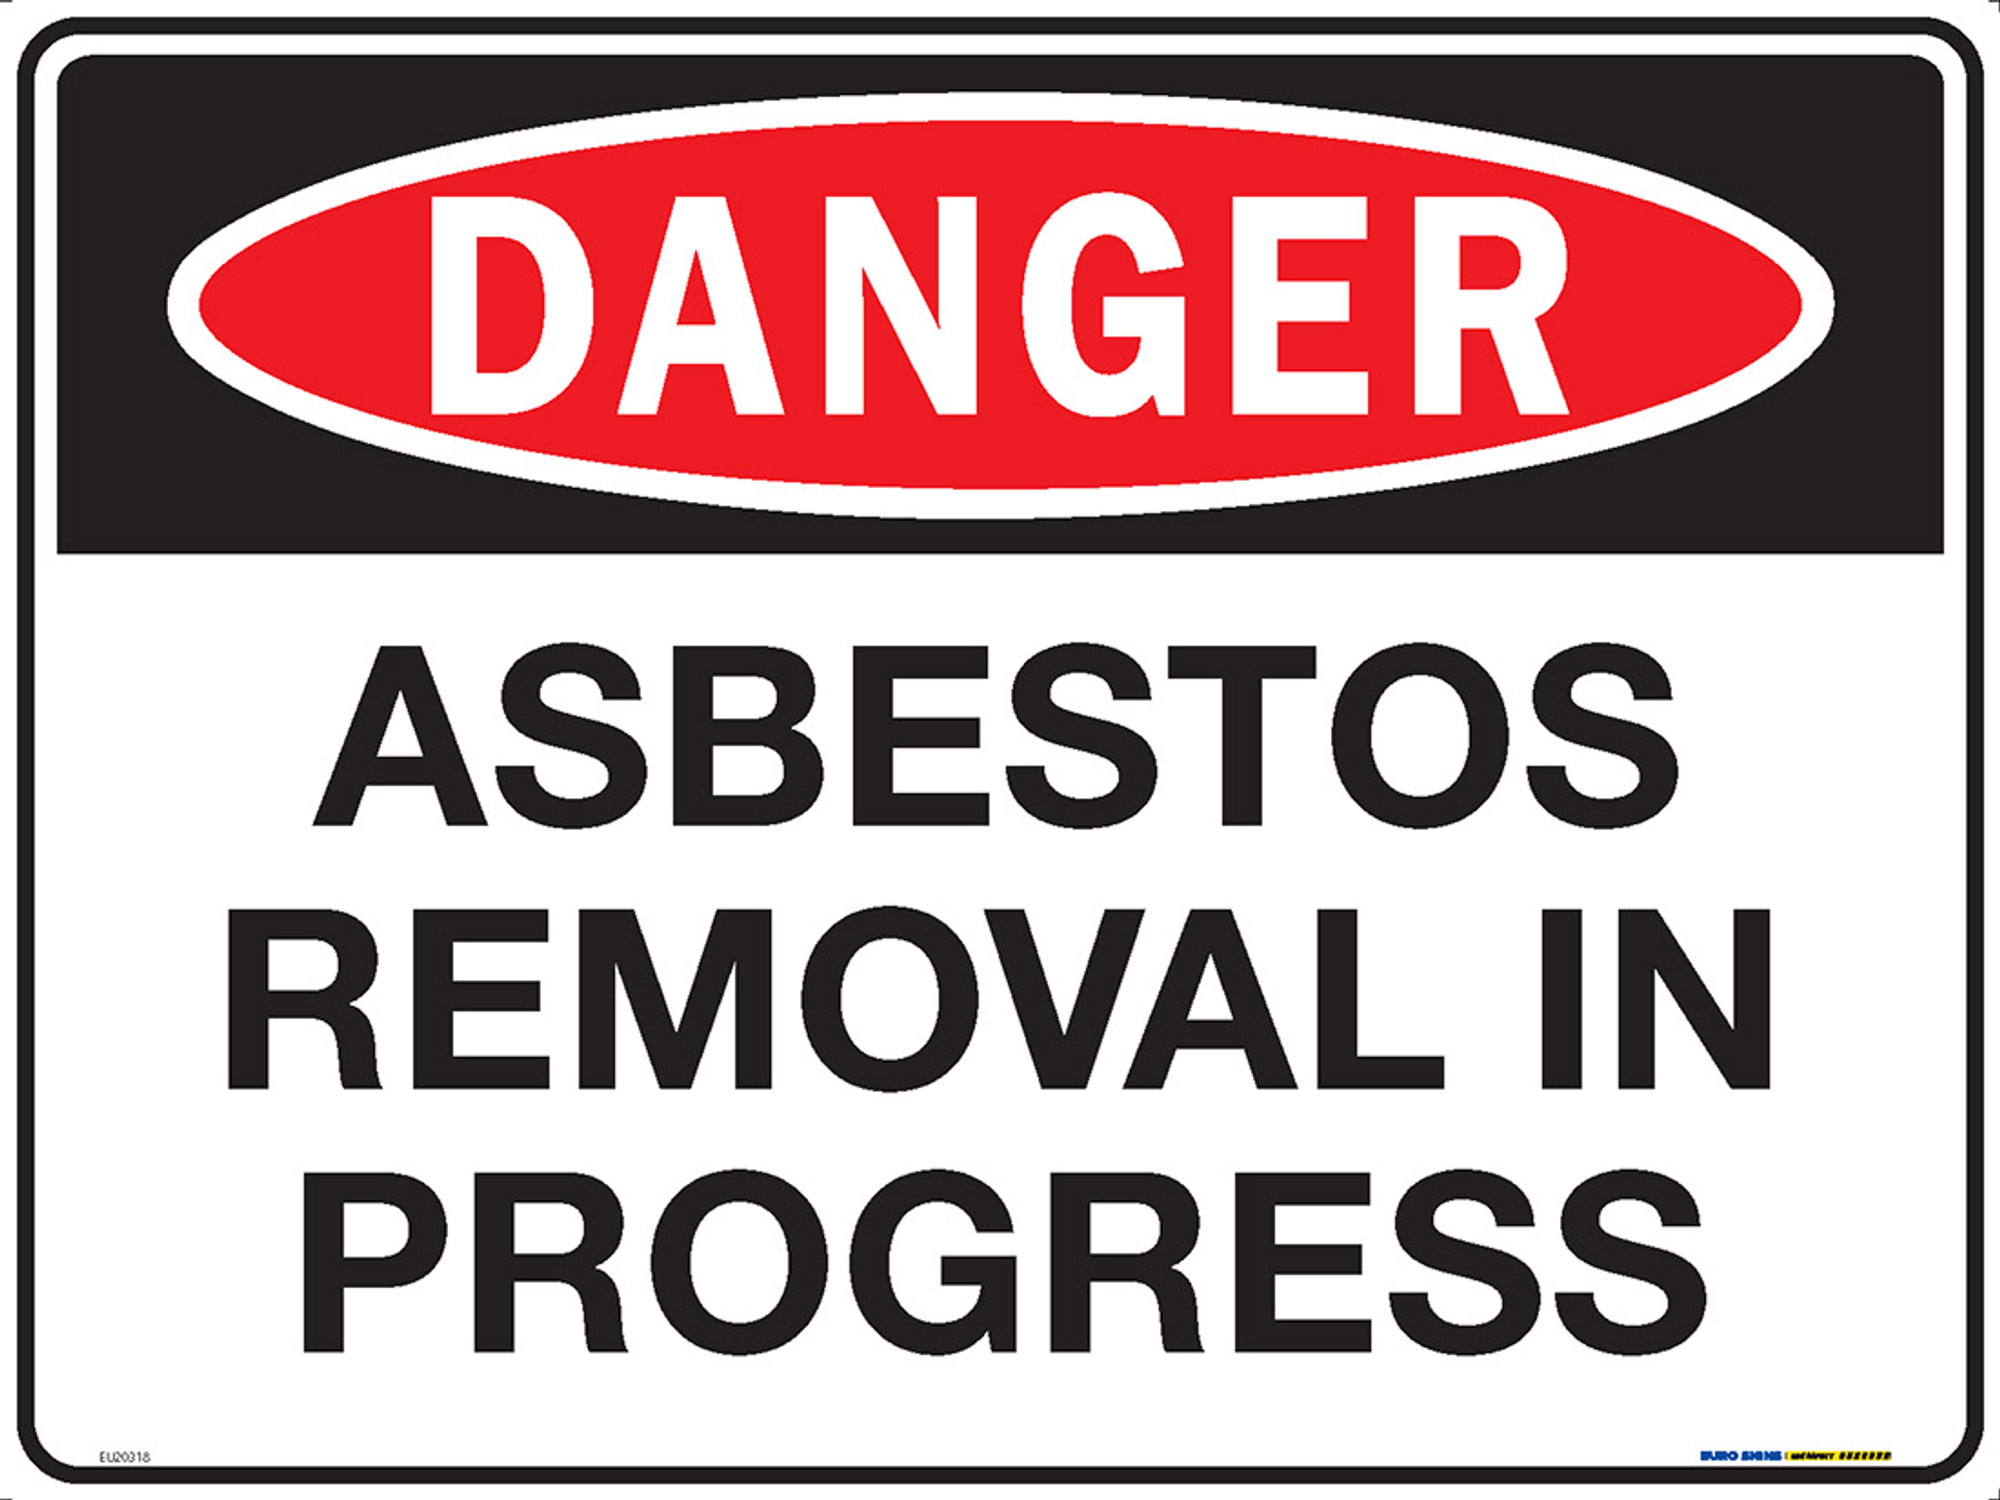 warning-contains-asbestos-signs-from-key-signs-uk